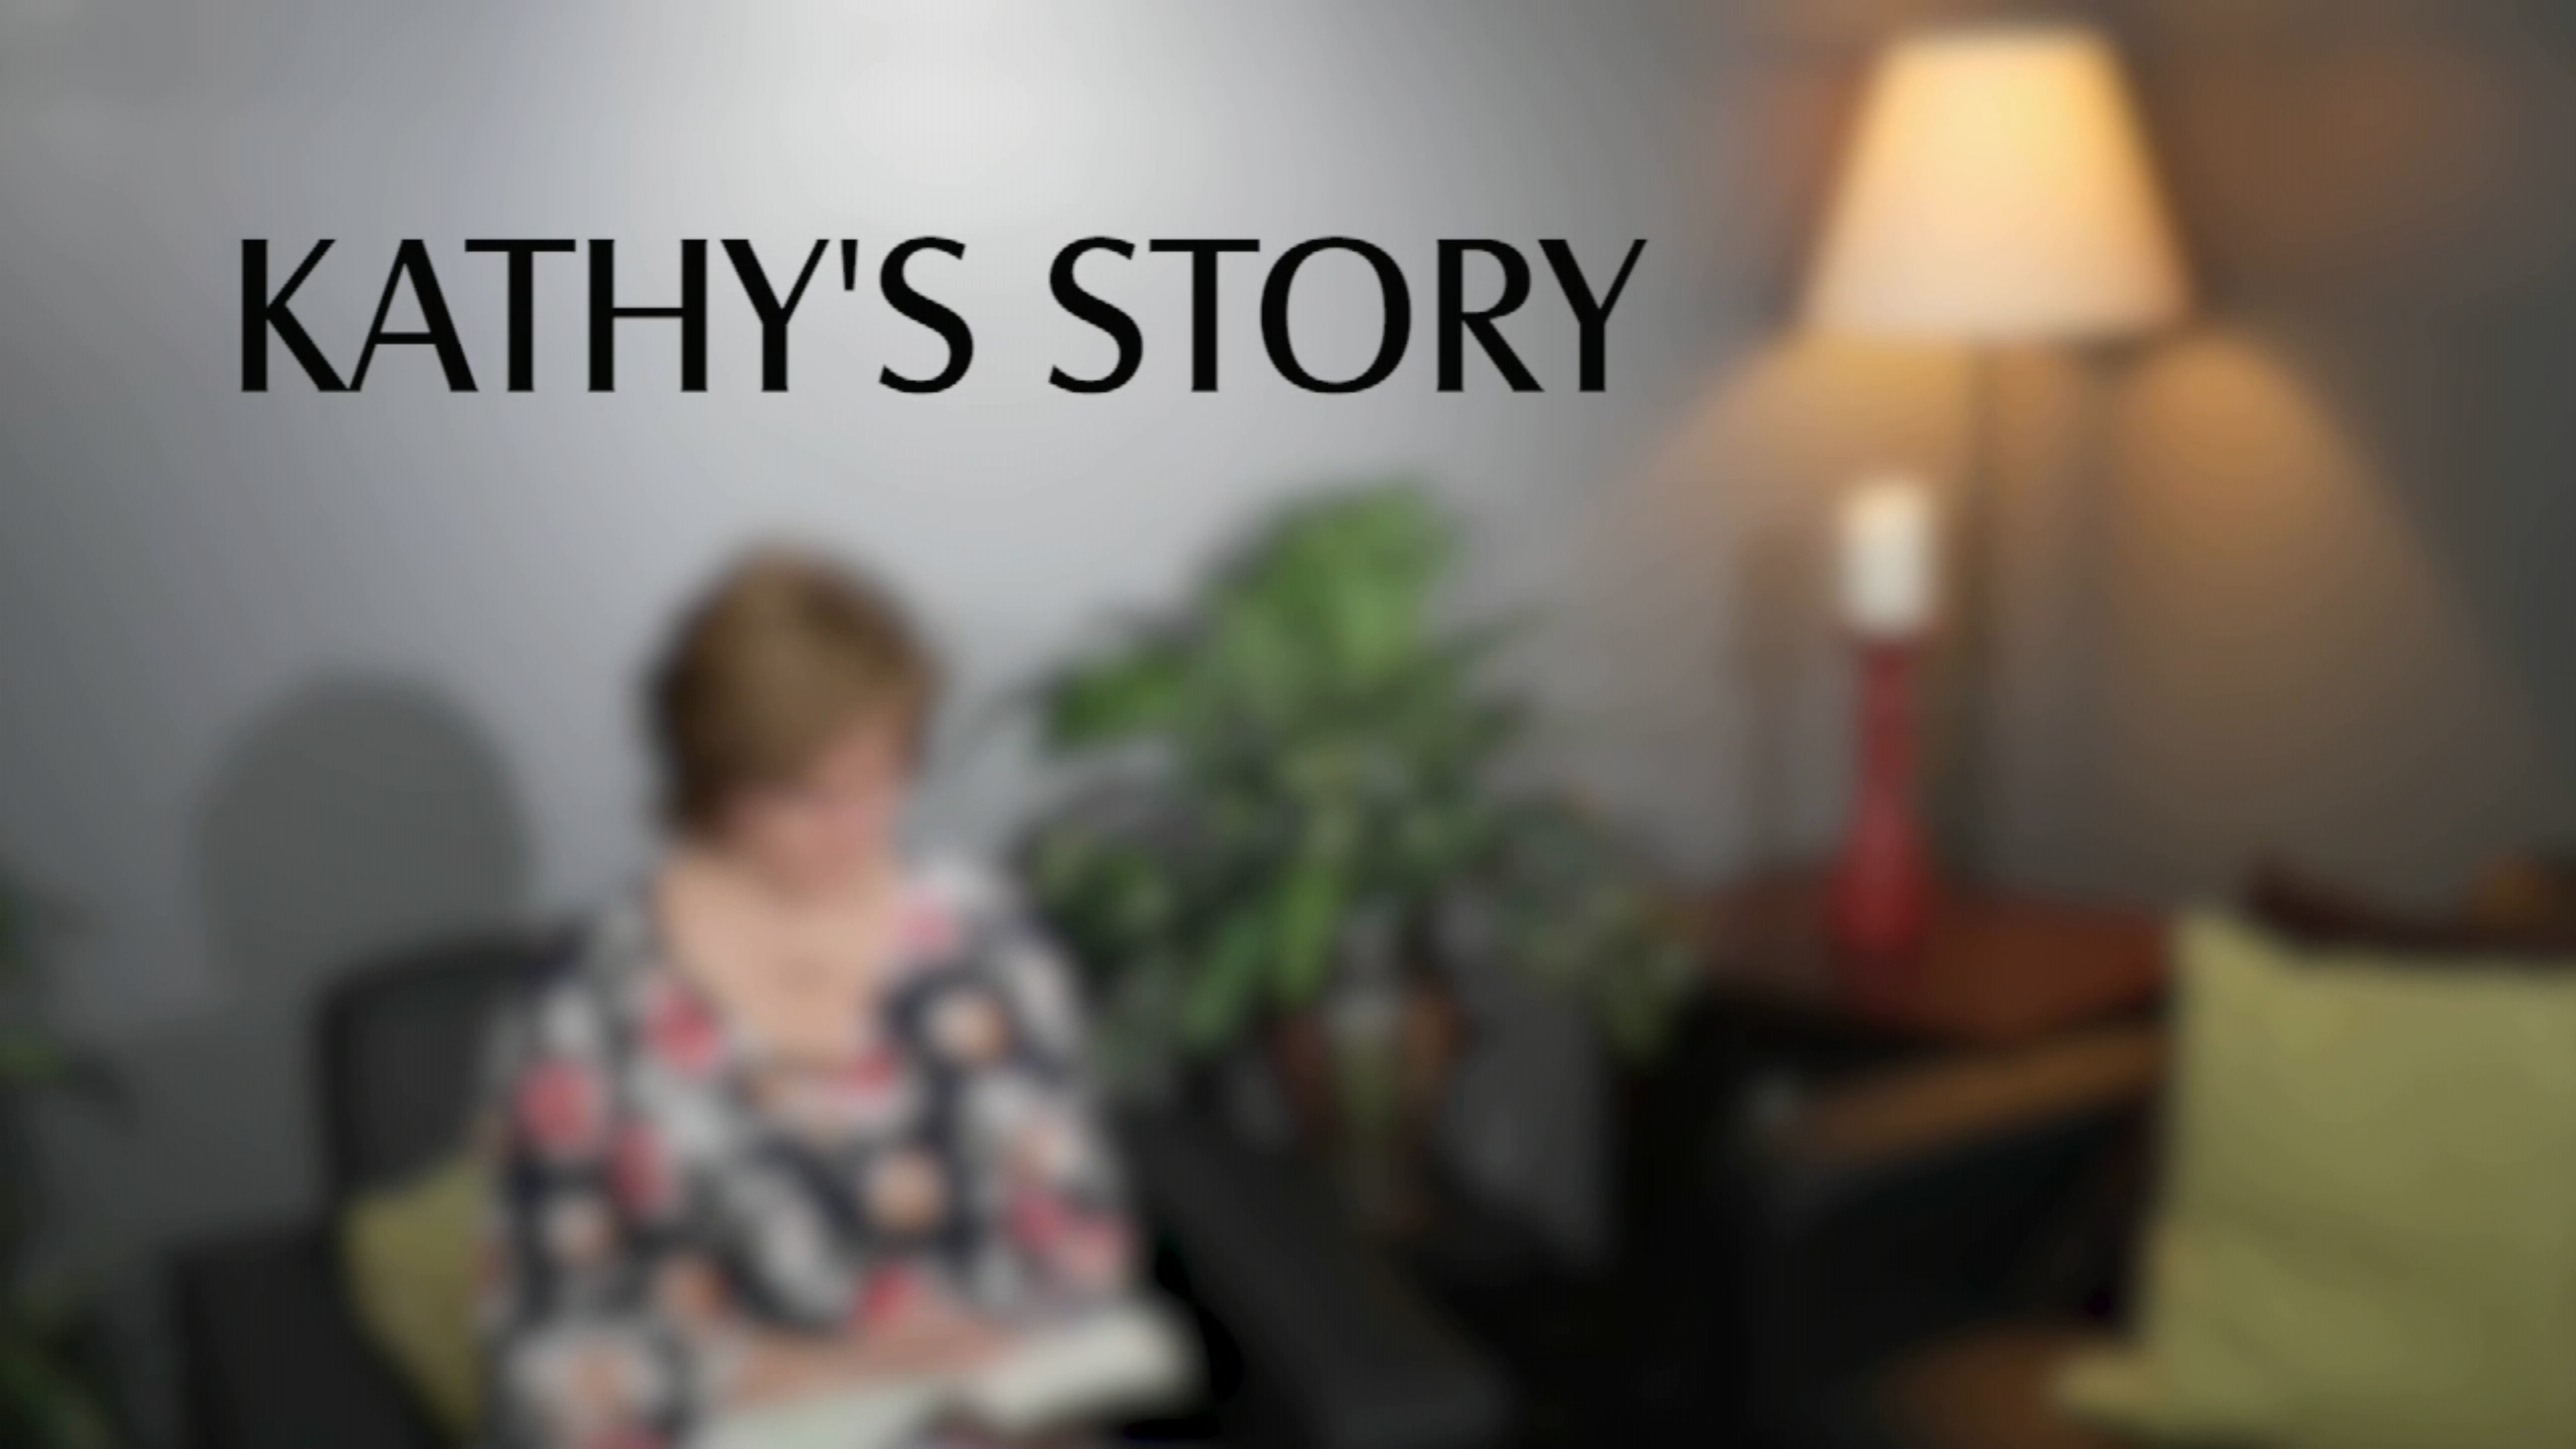 Kathy's Story